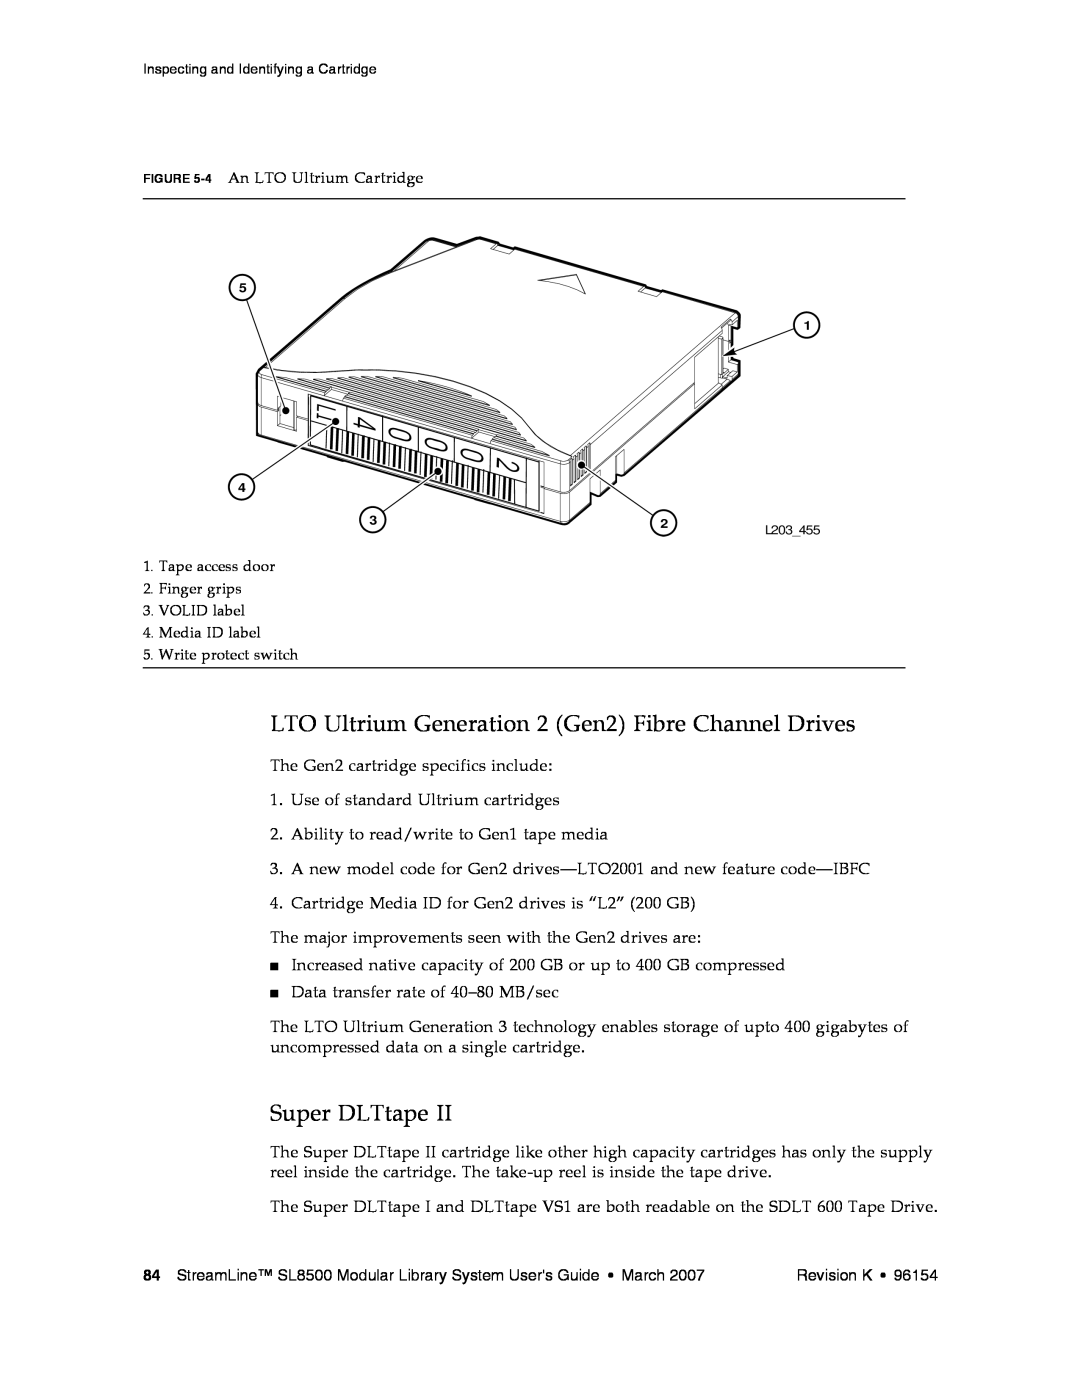 Sun Microsystems SL8500 manual LTO Ultrium Generation 2 Gen2 Fibre Channel Drives, Super DLTtape 